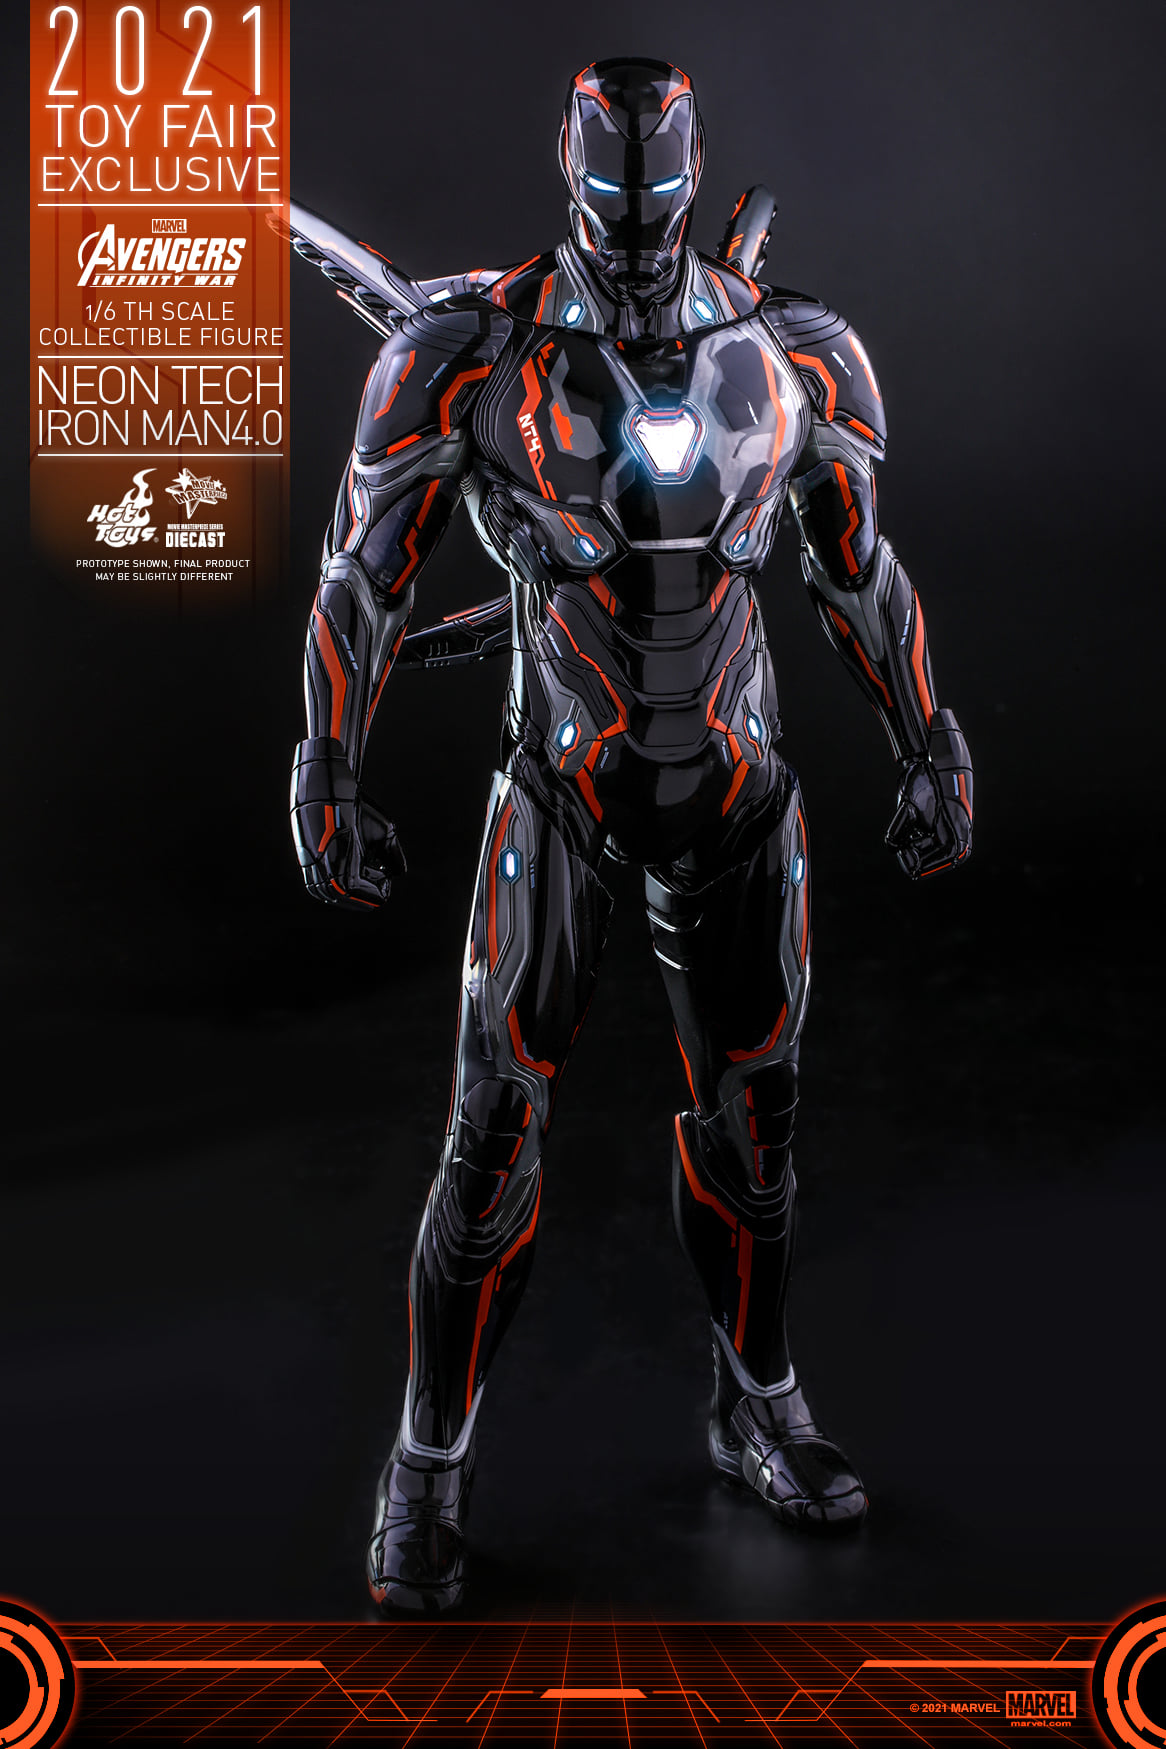 Neon Tech Iron Man 4.0 2